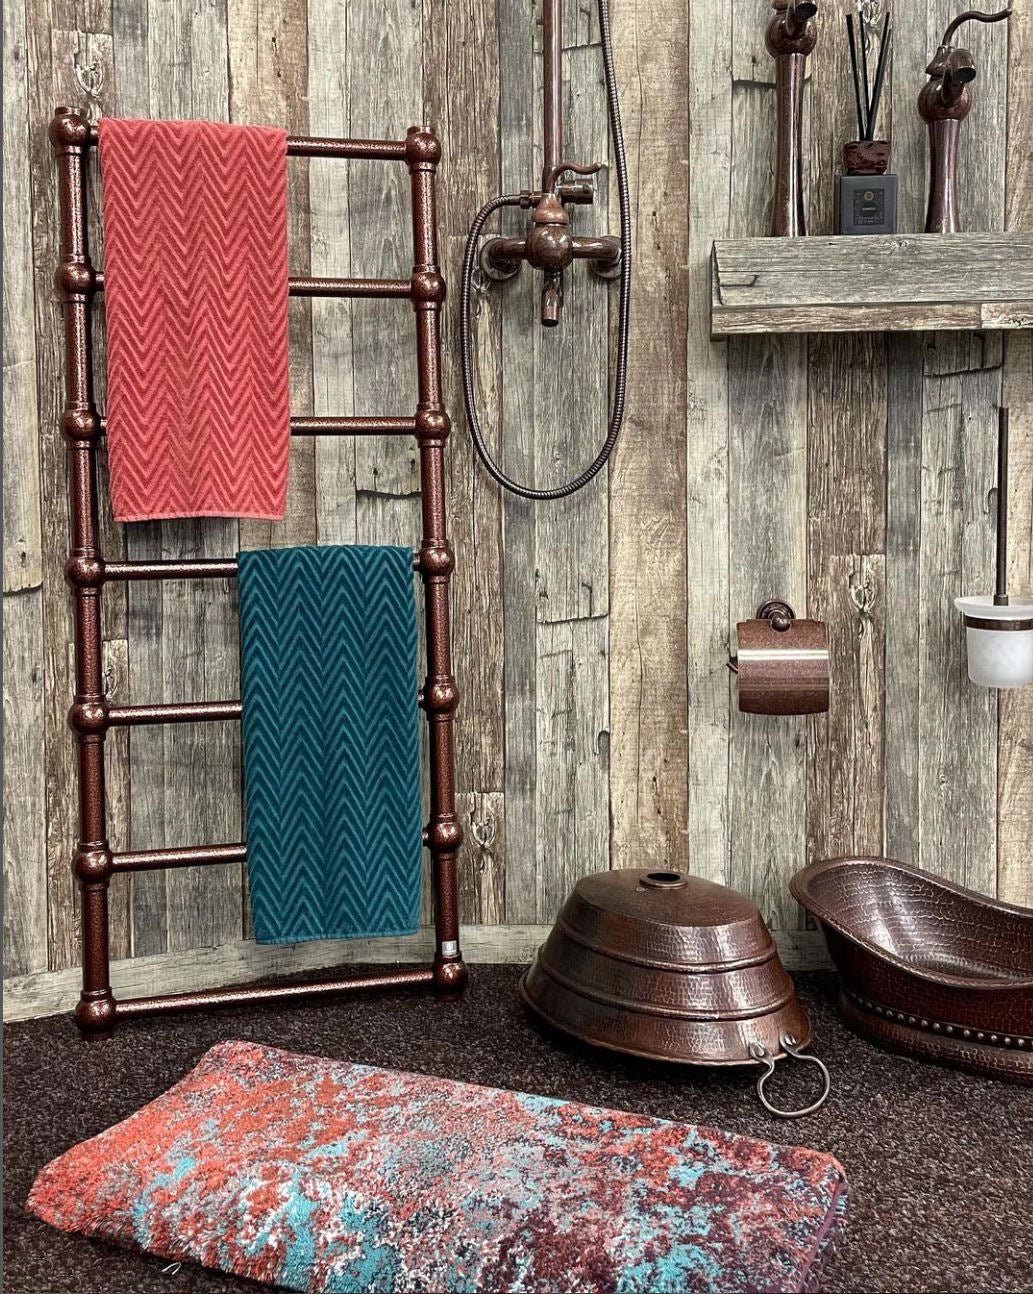 Double Towel Holder Antique Marble - |VESIMI Design| Luxury and Rustic bathrooms online